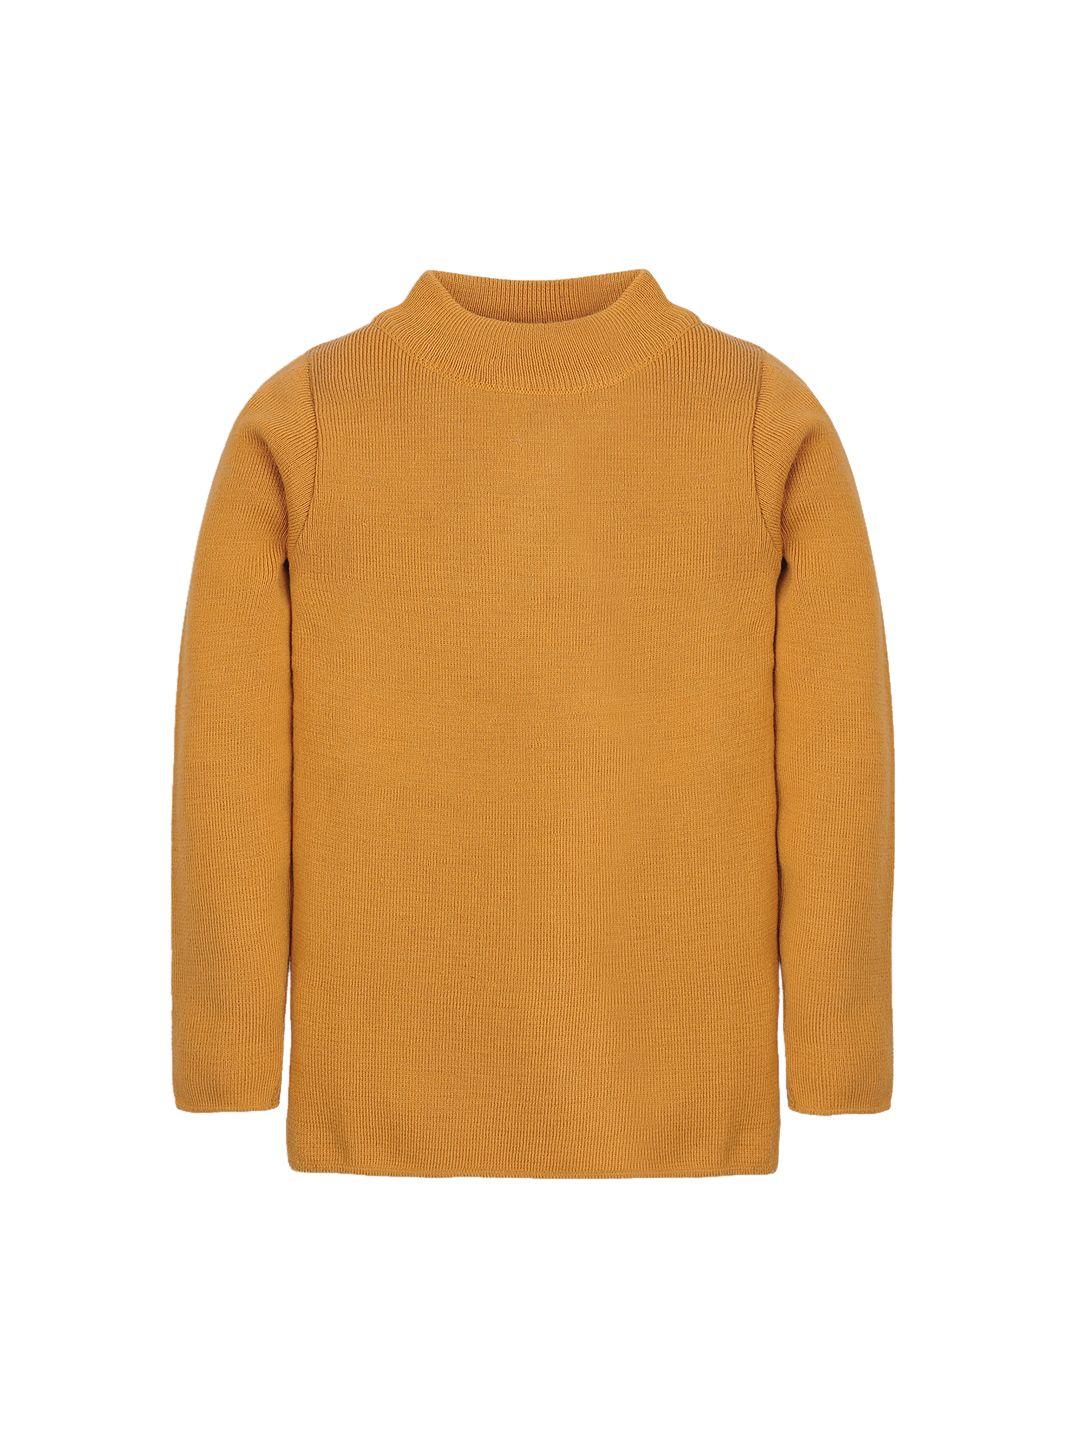 rvk unisex mustard yellow solid sweater